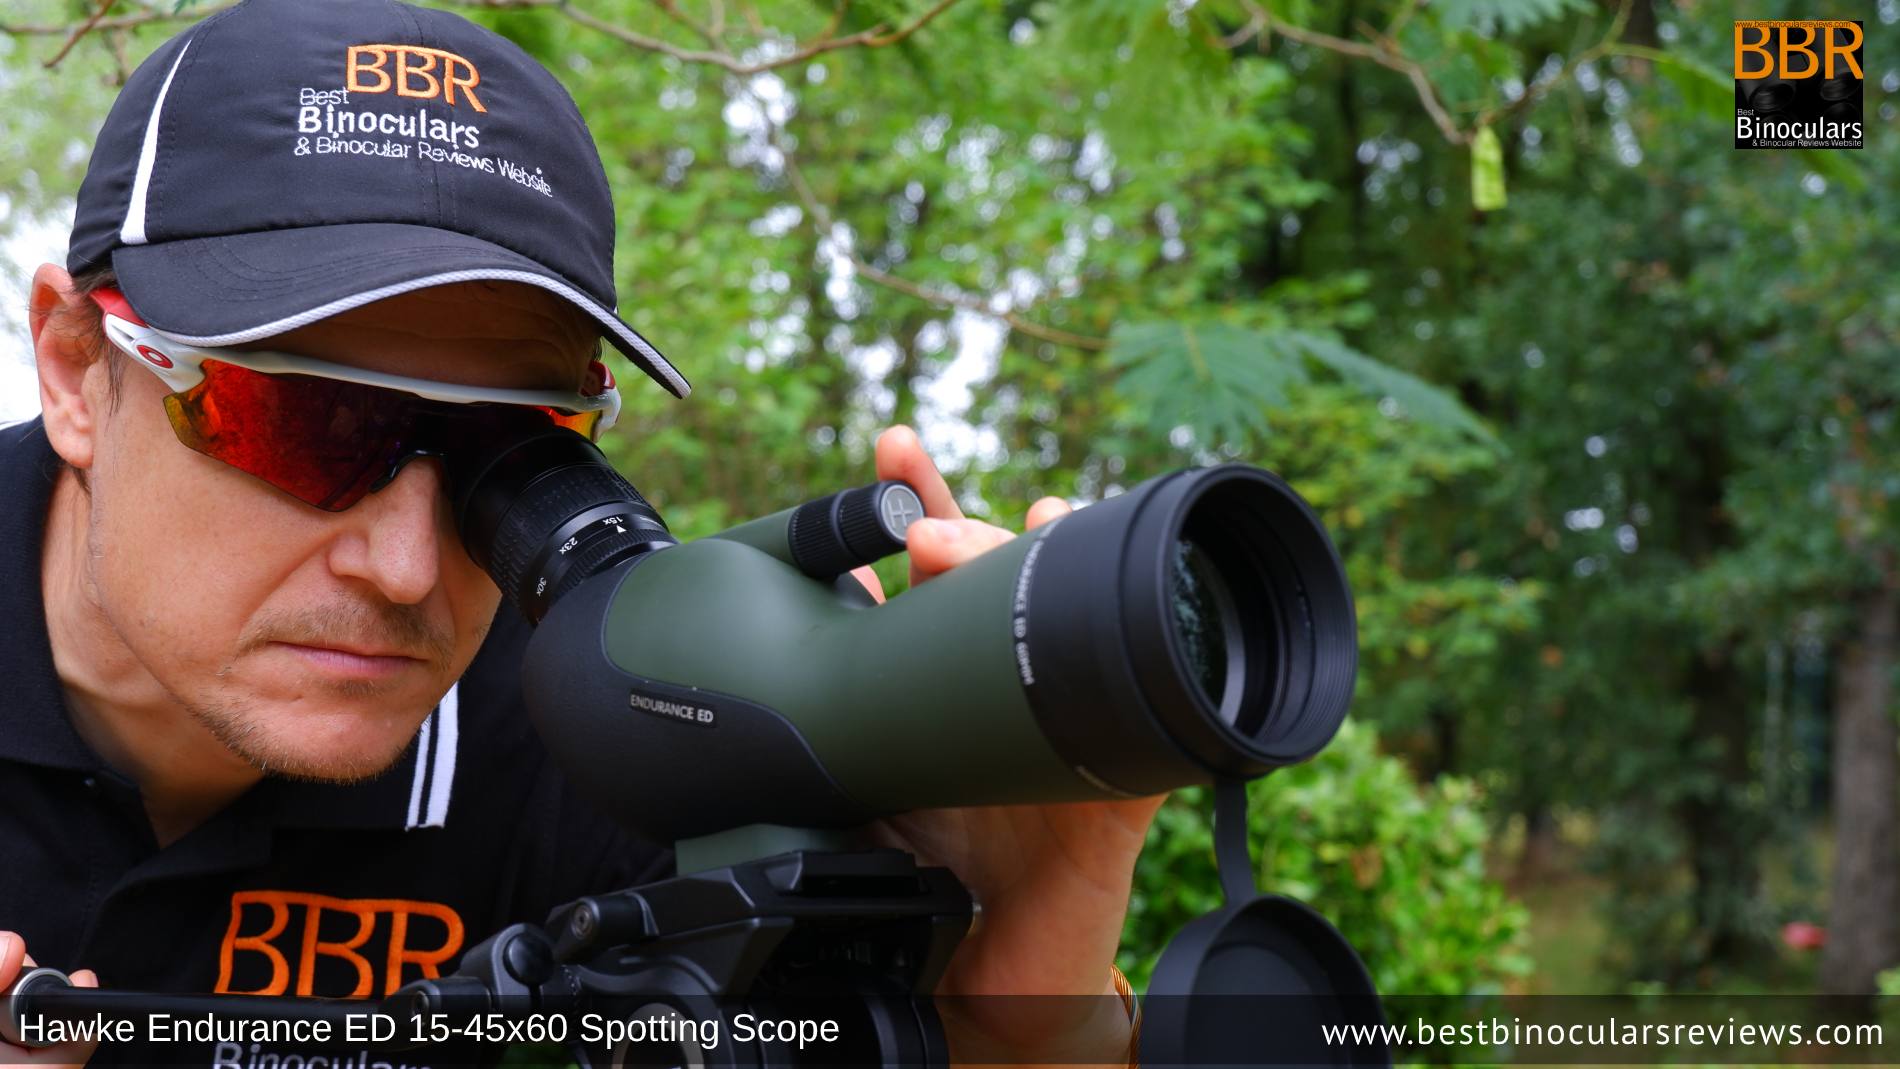 Hawke Endurance 15-45x60 Spotting Scope